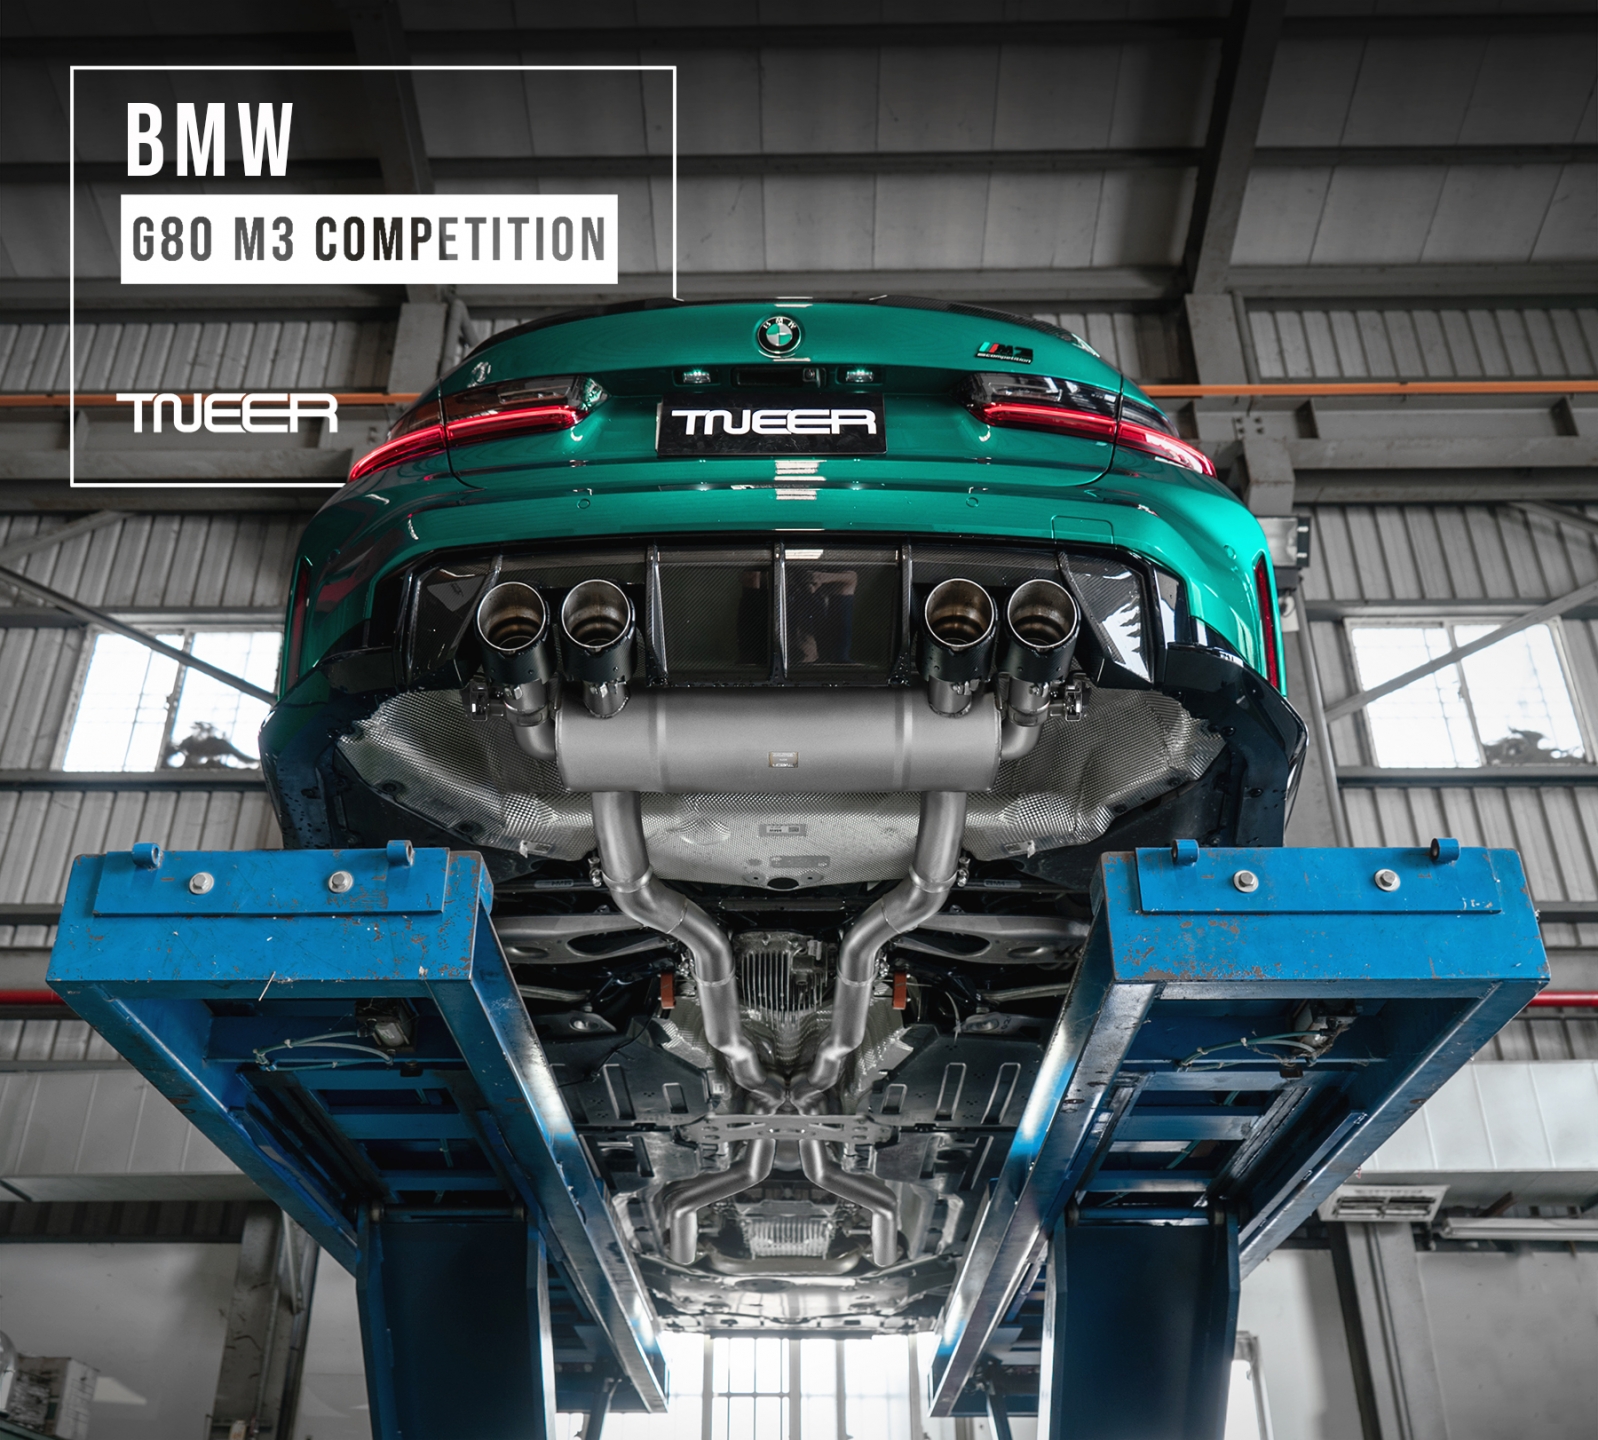 BMW G80 M3 TNEER Downpipes